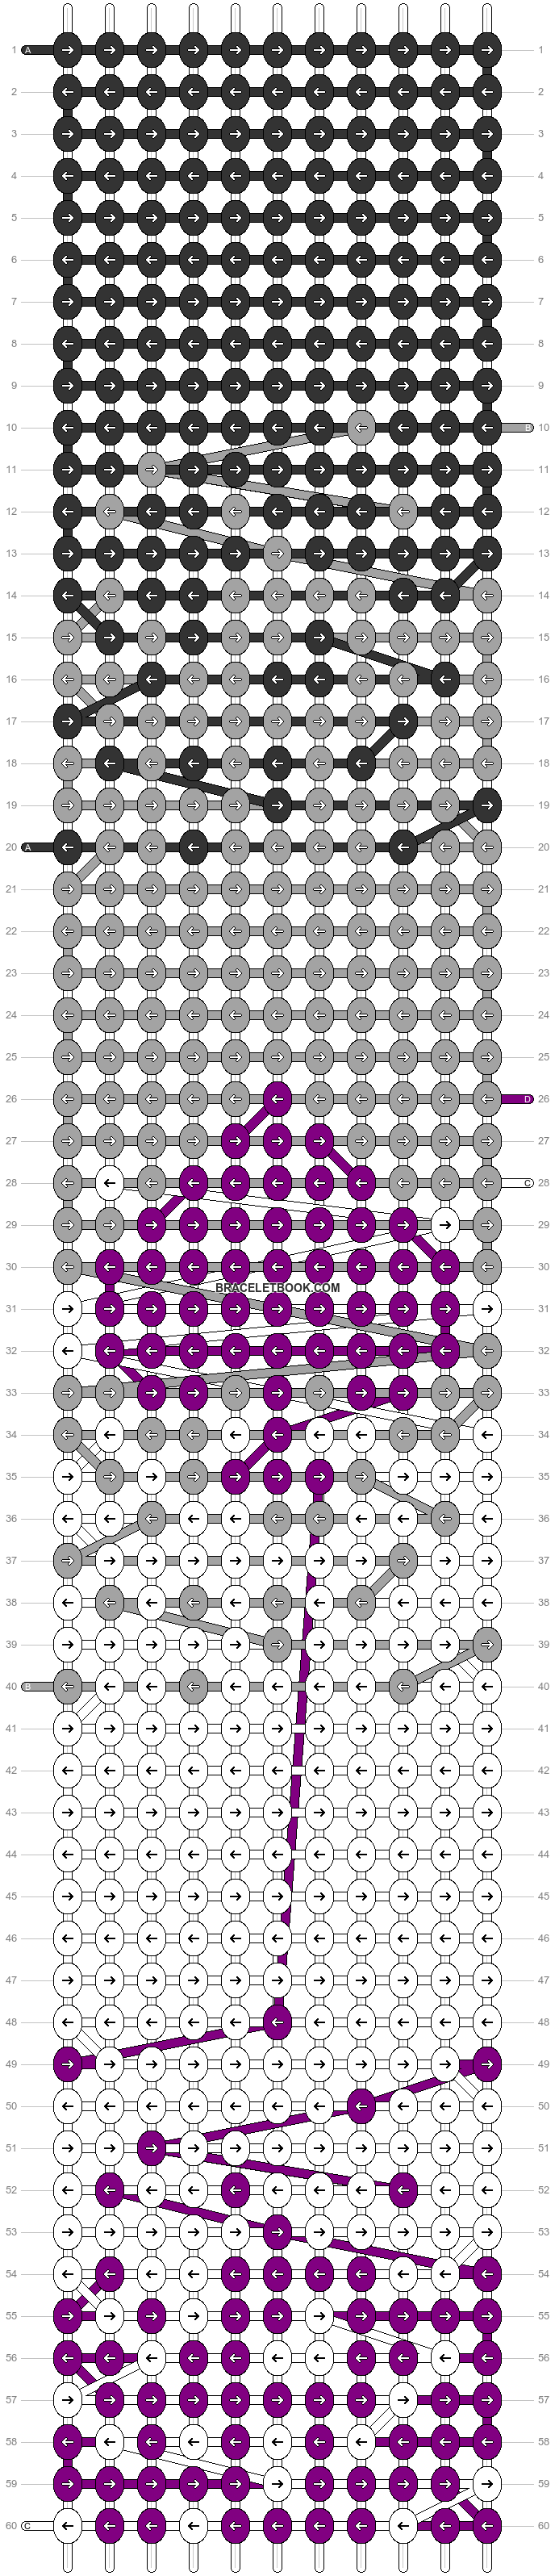 Alpha pattern #50313 variation #79806 pattern